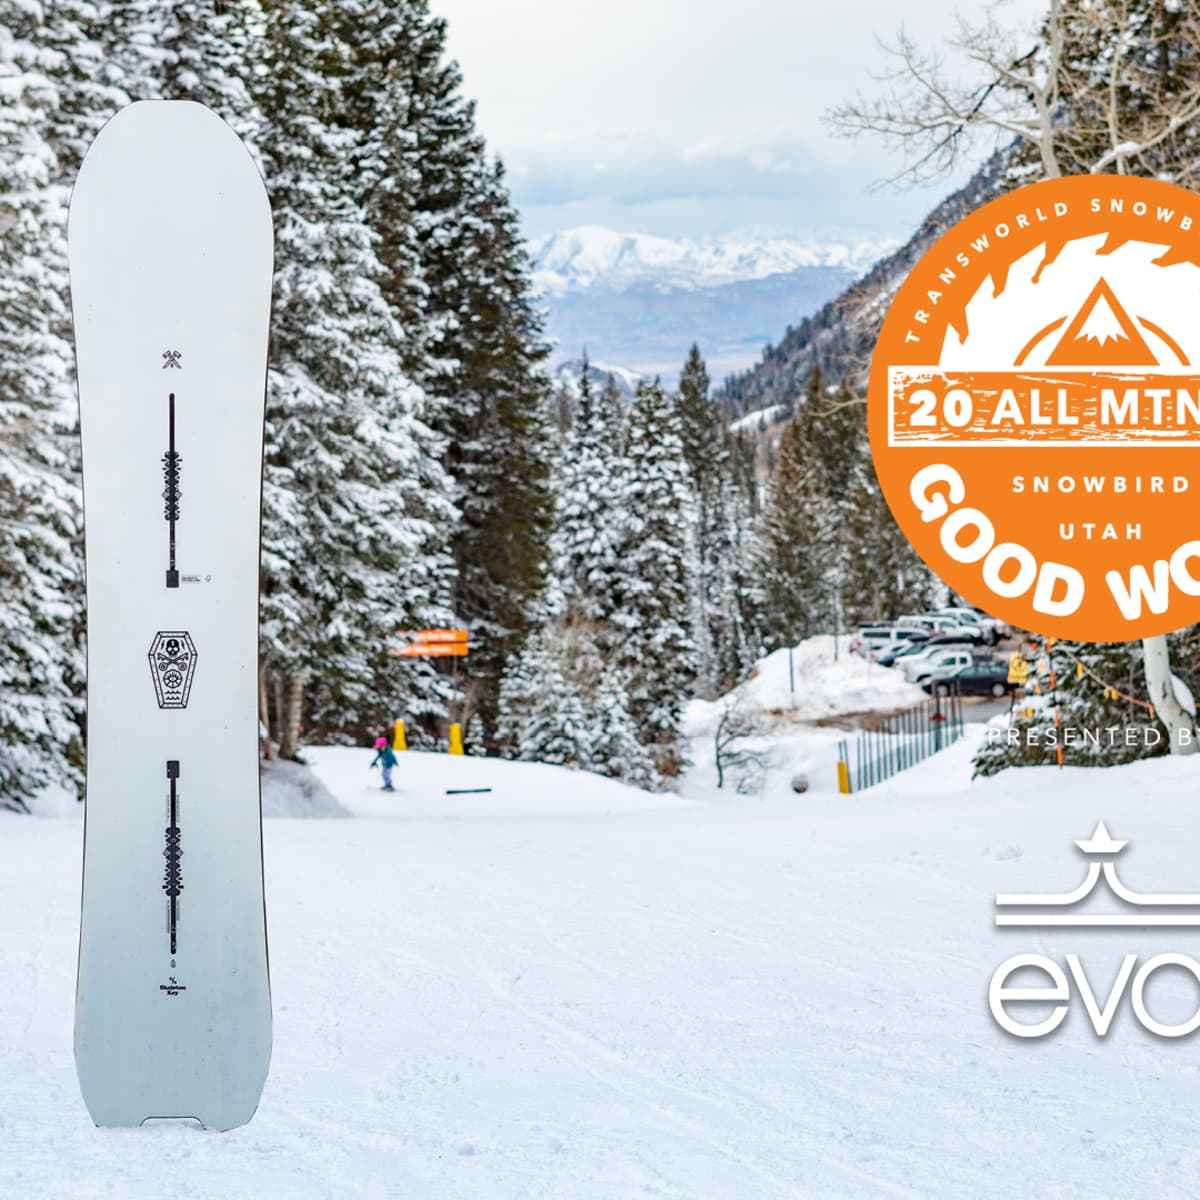 Gezag Sherlock Holmes Verdachte Burton Skeleton Key Snowboard Review: Best Men's All-Mountain Snowboards of  2019 - Good Wood 2018-2019 | TransWorld SNOWboarding - Snowboarder